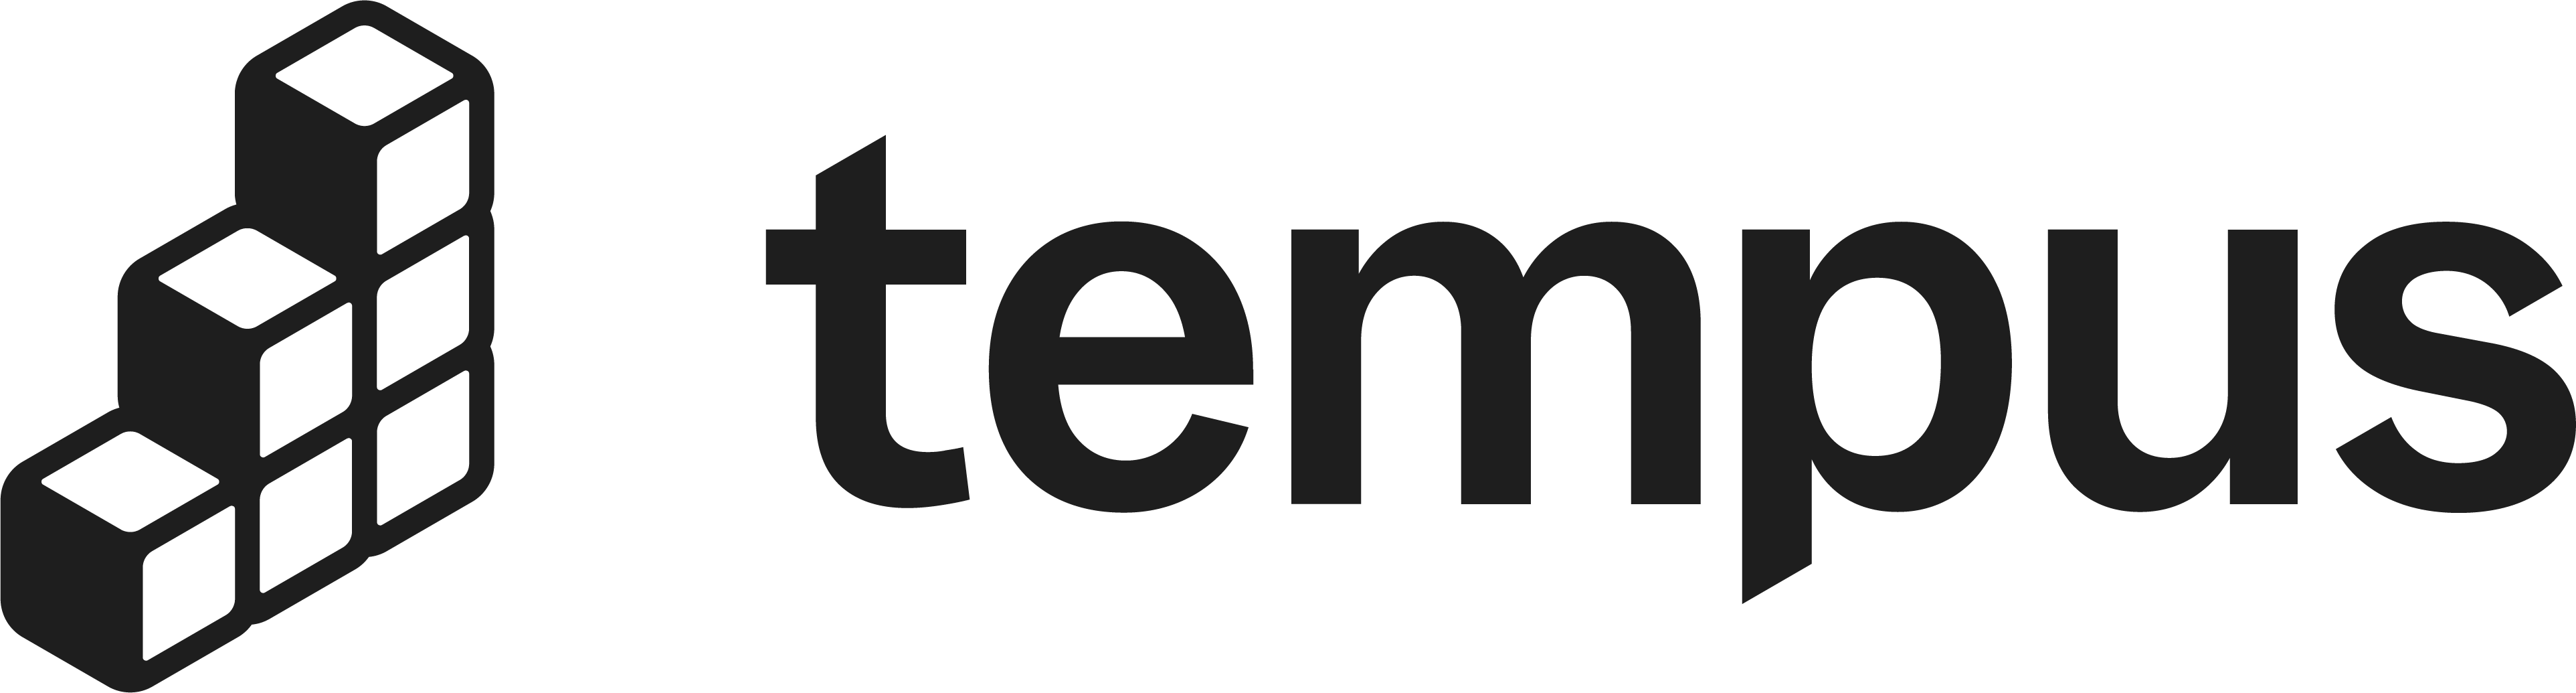 Tempus blockchain logo